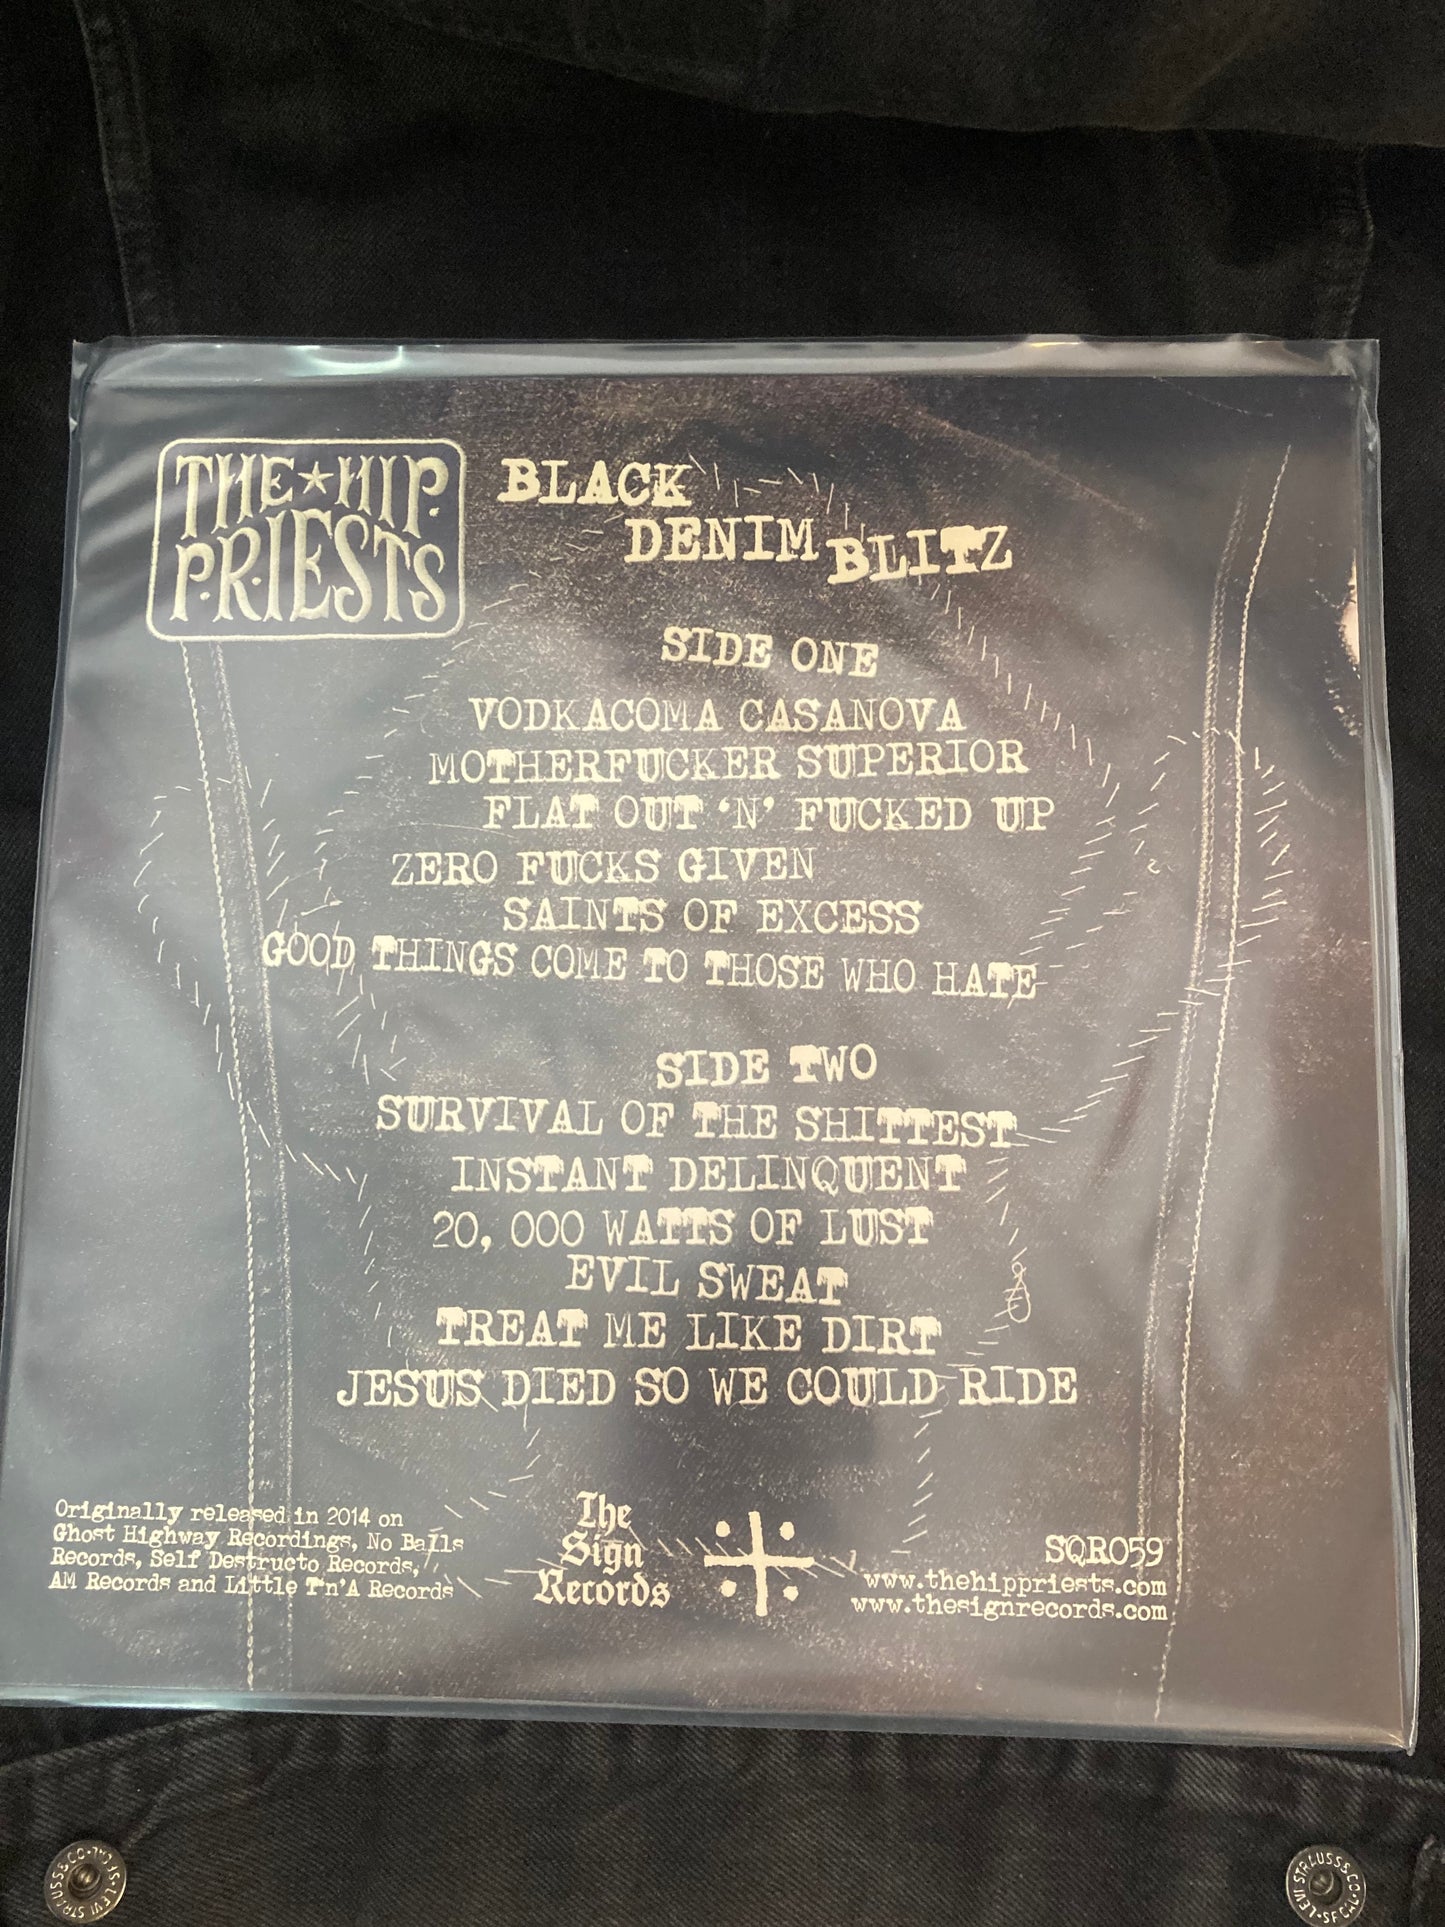 The Hip Priests - Black Denim Blitz